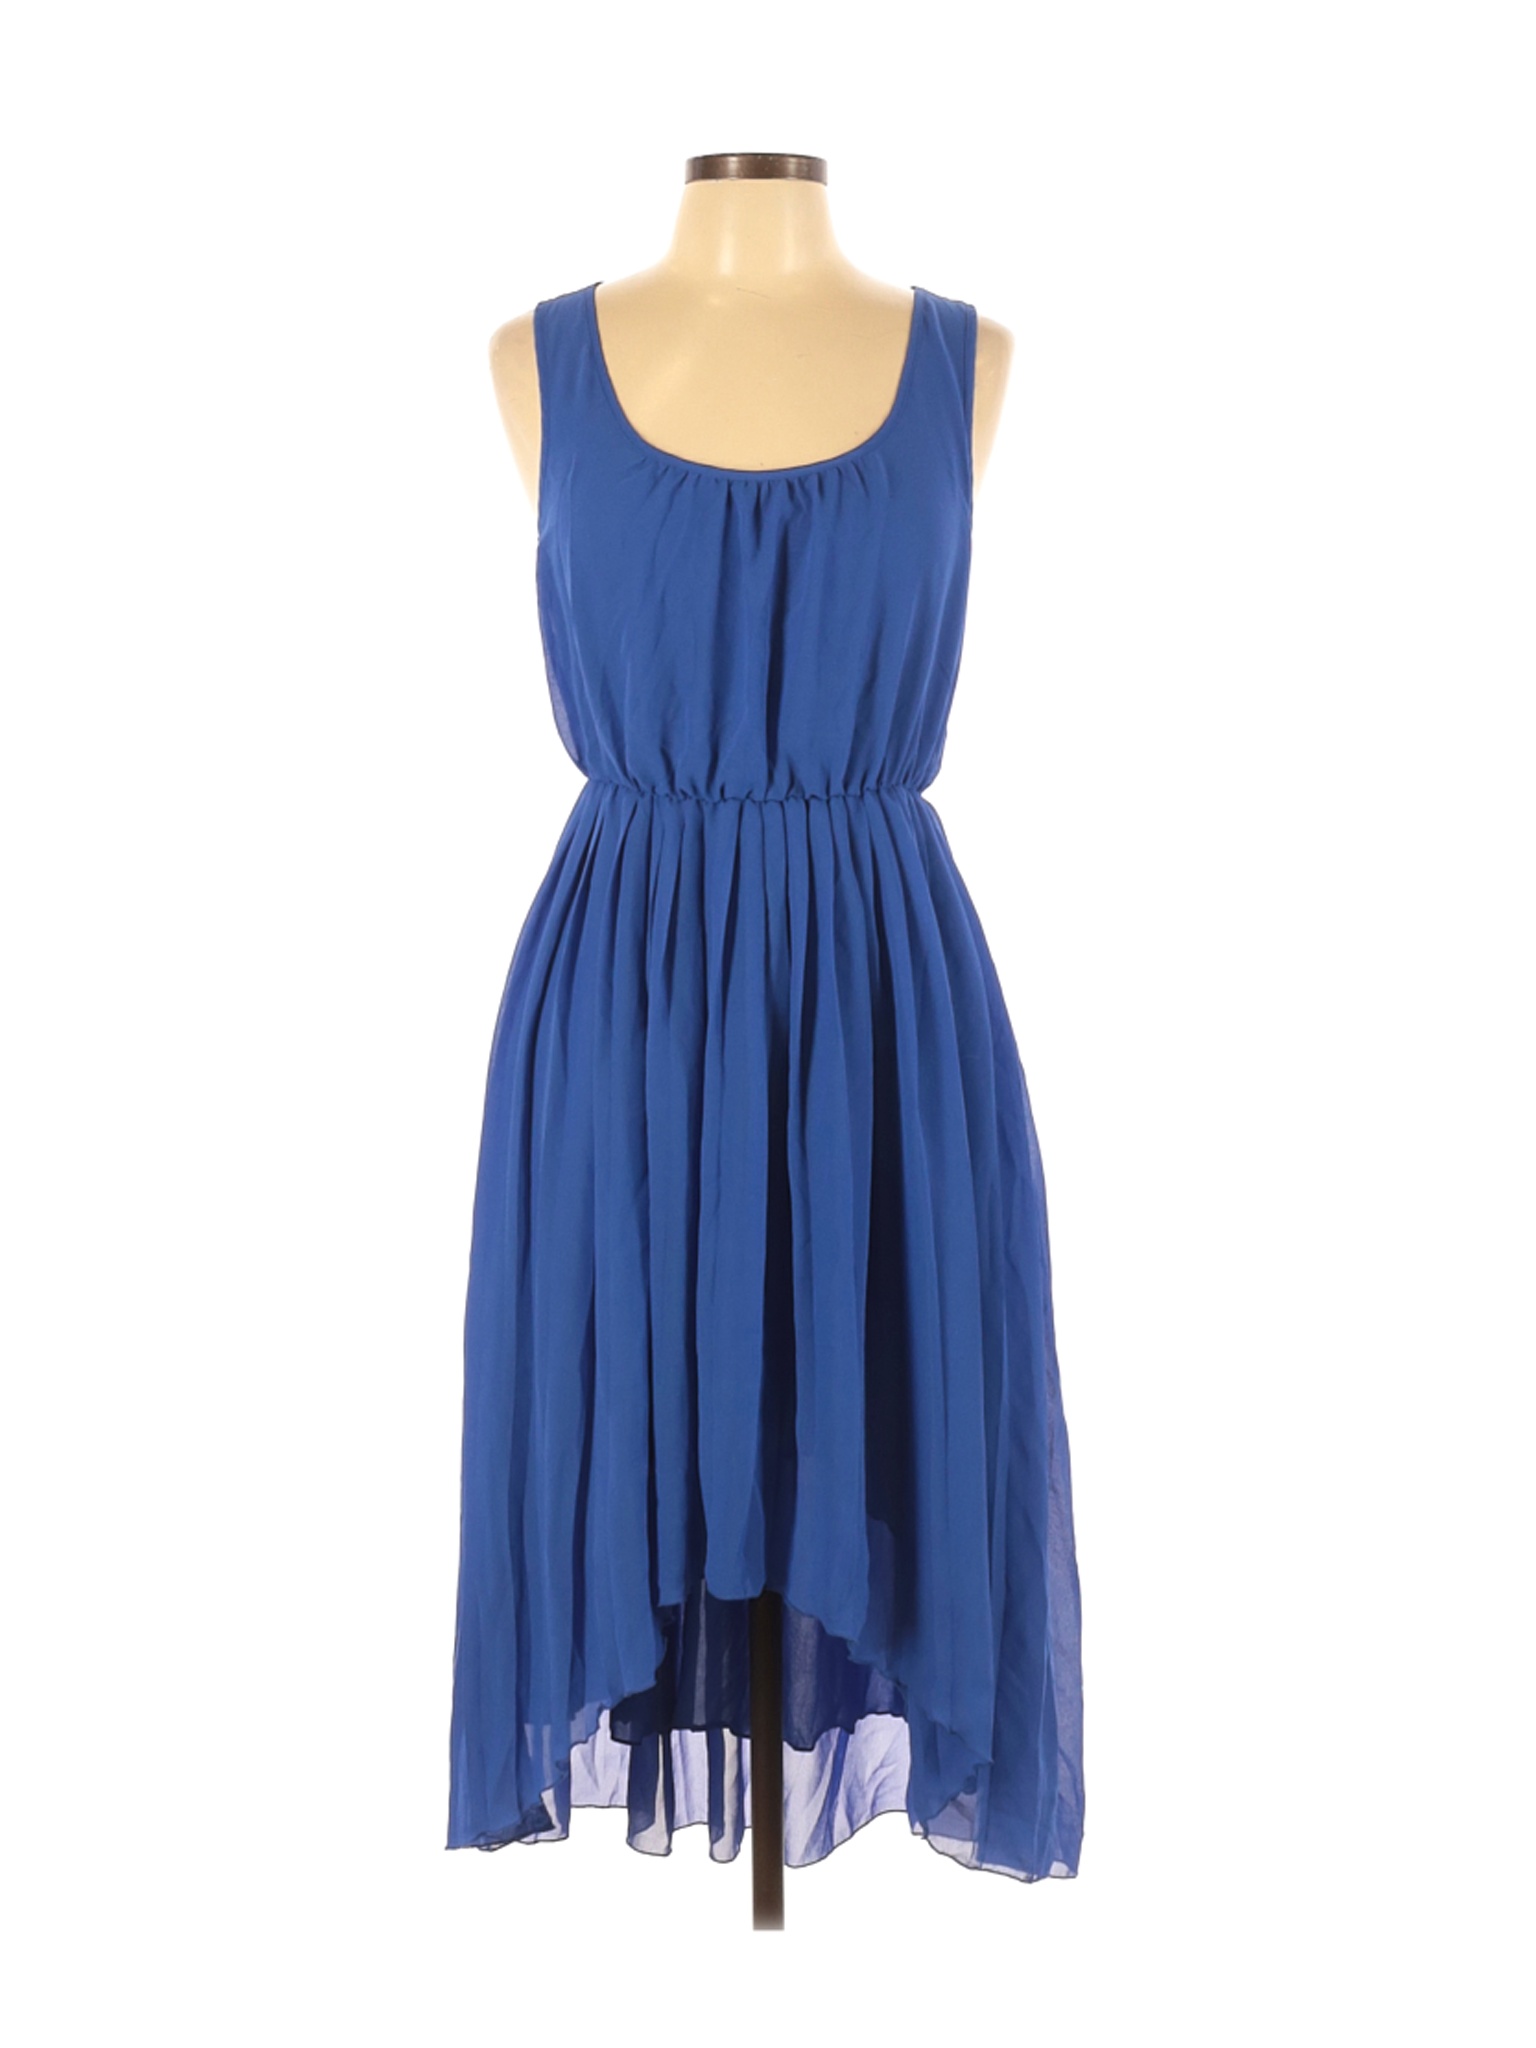 H&M Women Blue Casual Dress 12 | eBay